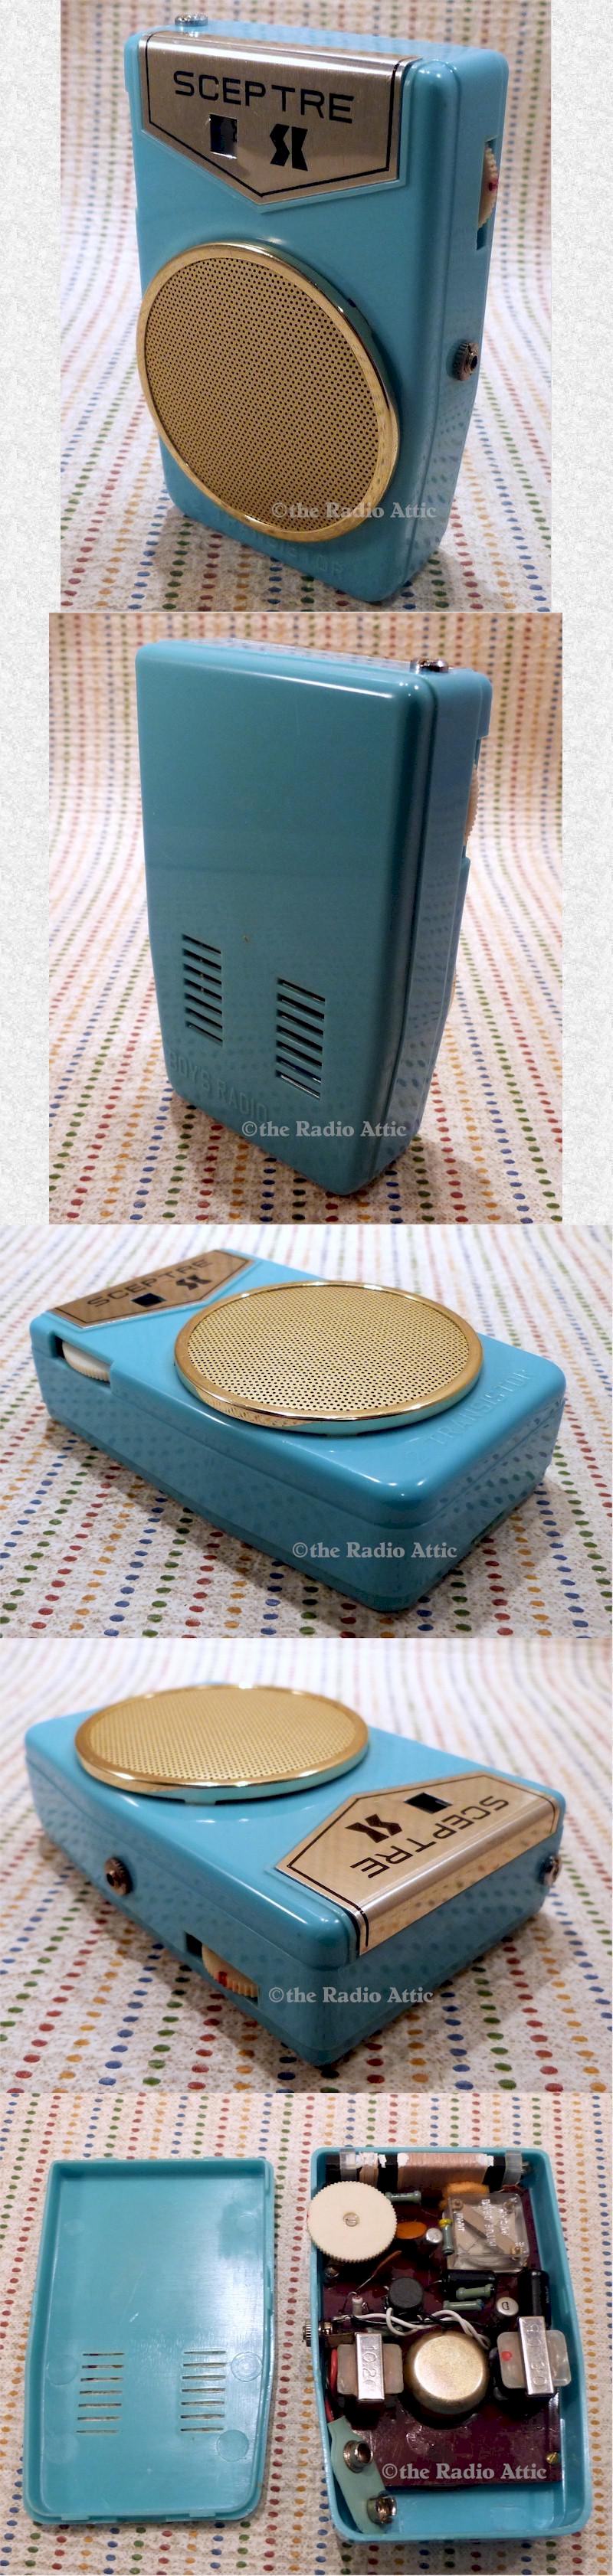 Sceptre  "Boy's Radio"